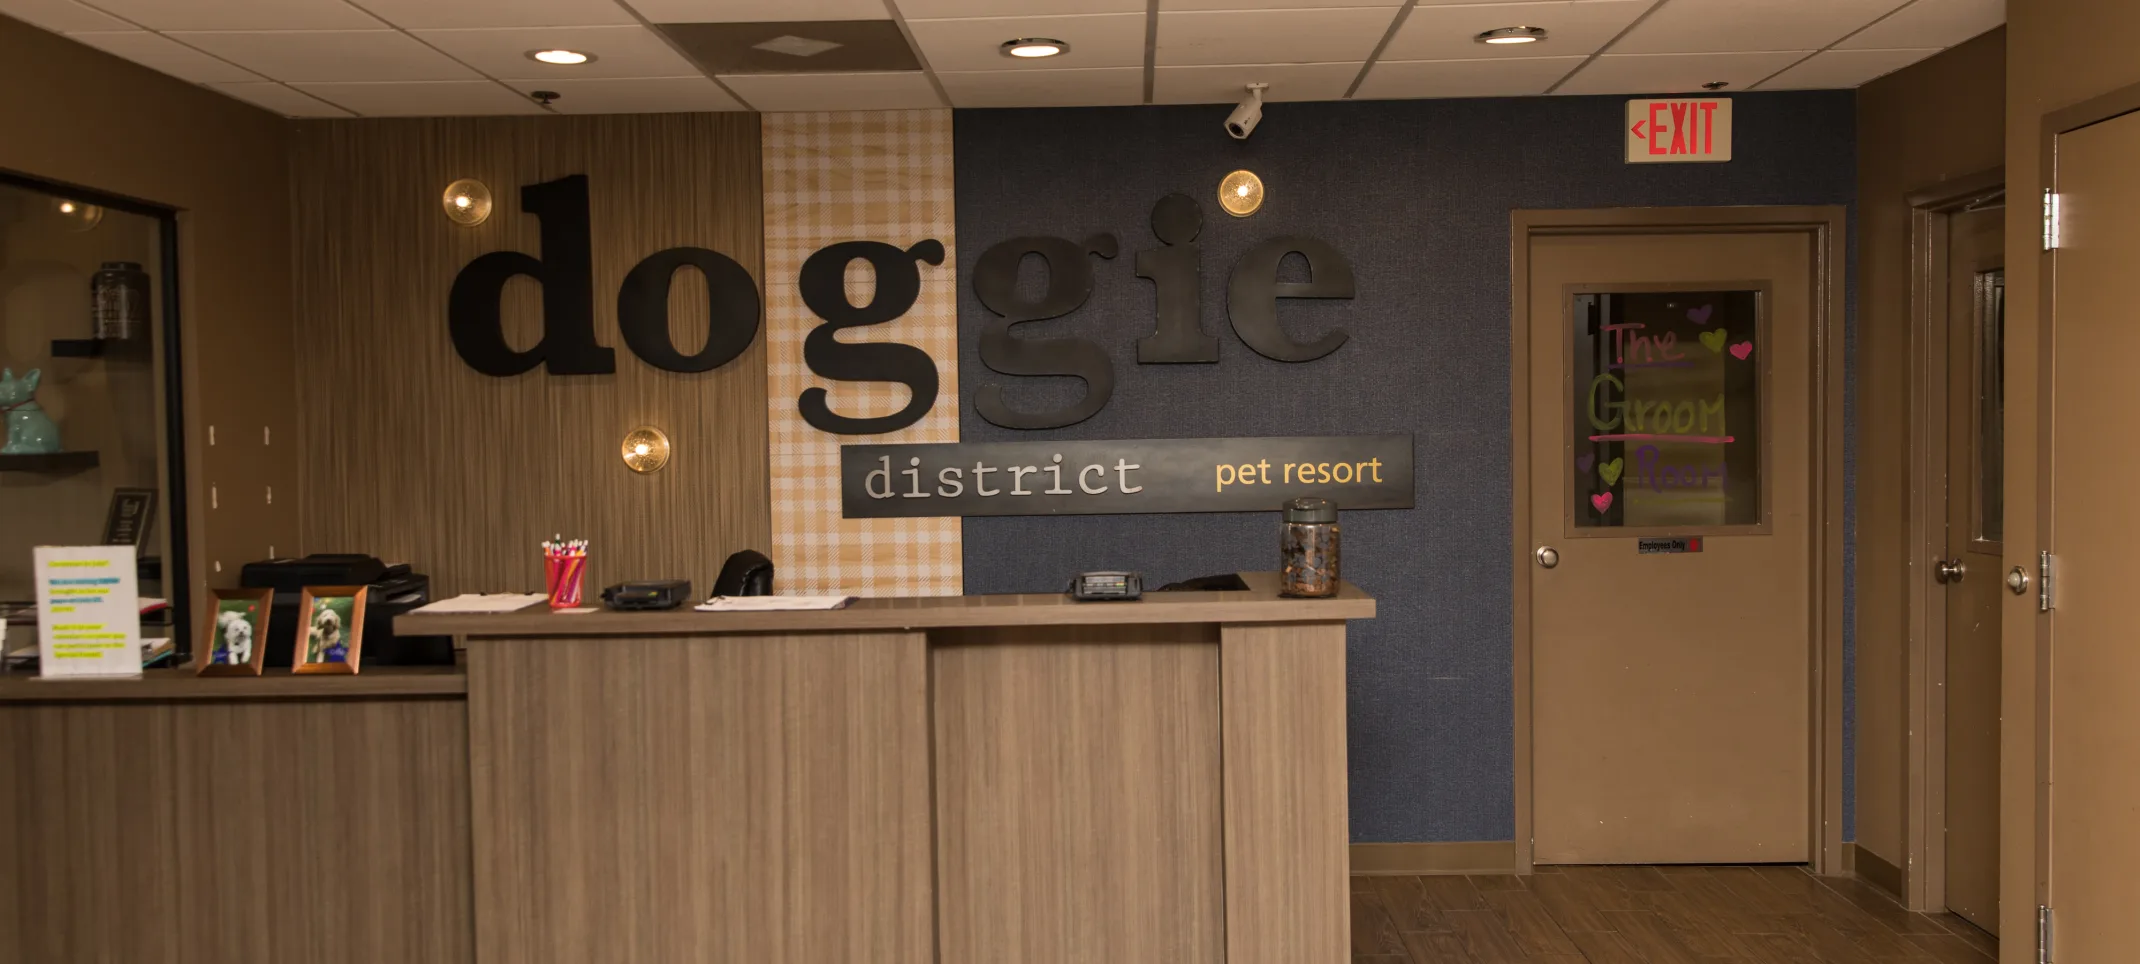  Doggie District - Mesa - Lobby 